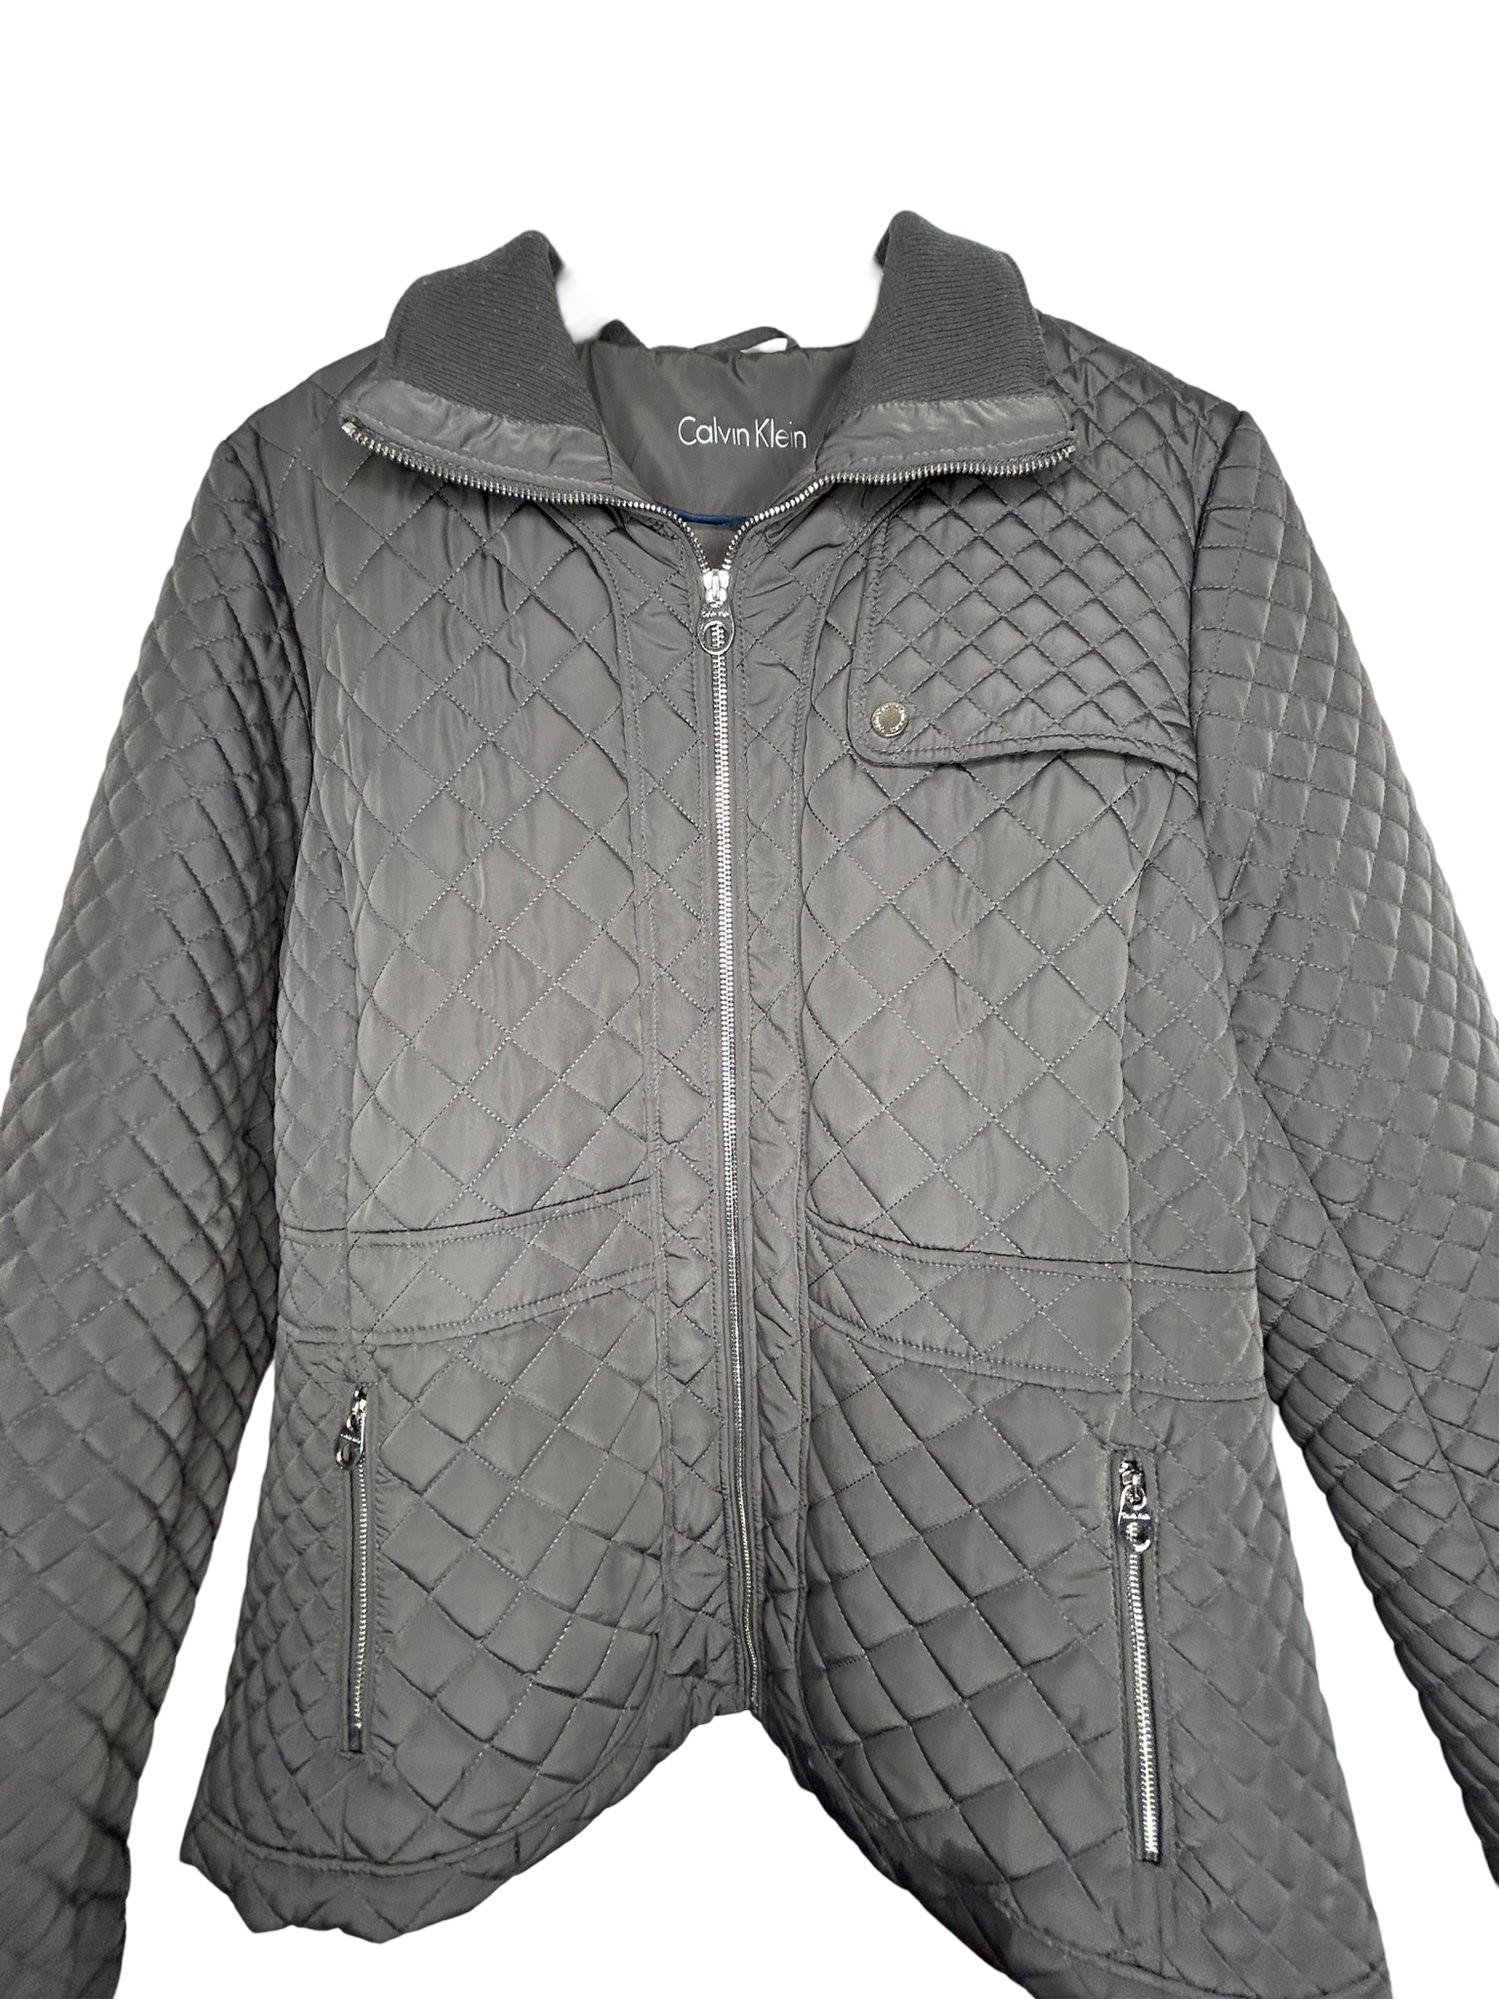 Calvin Klein Grey Patch Work Jacket Size XL #2014 | Auctionninja.com